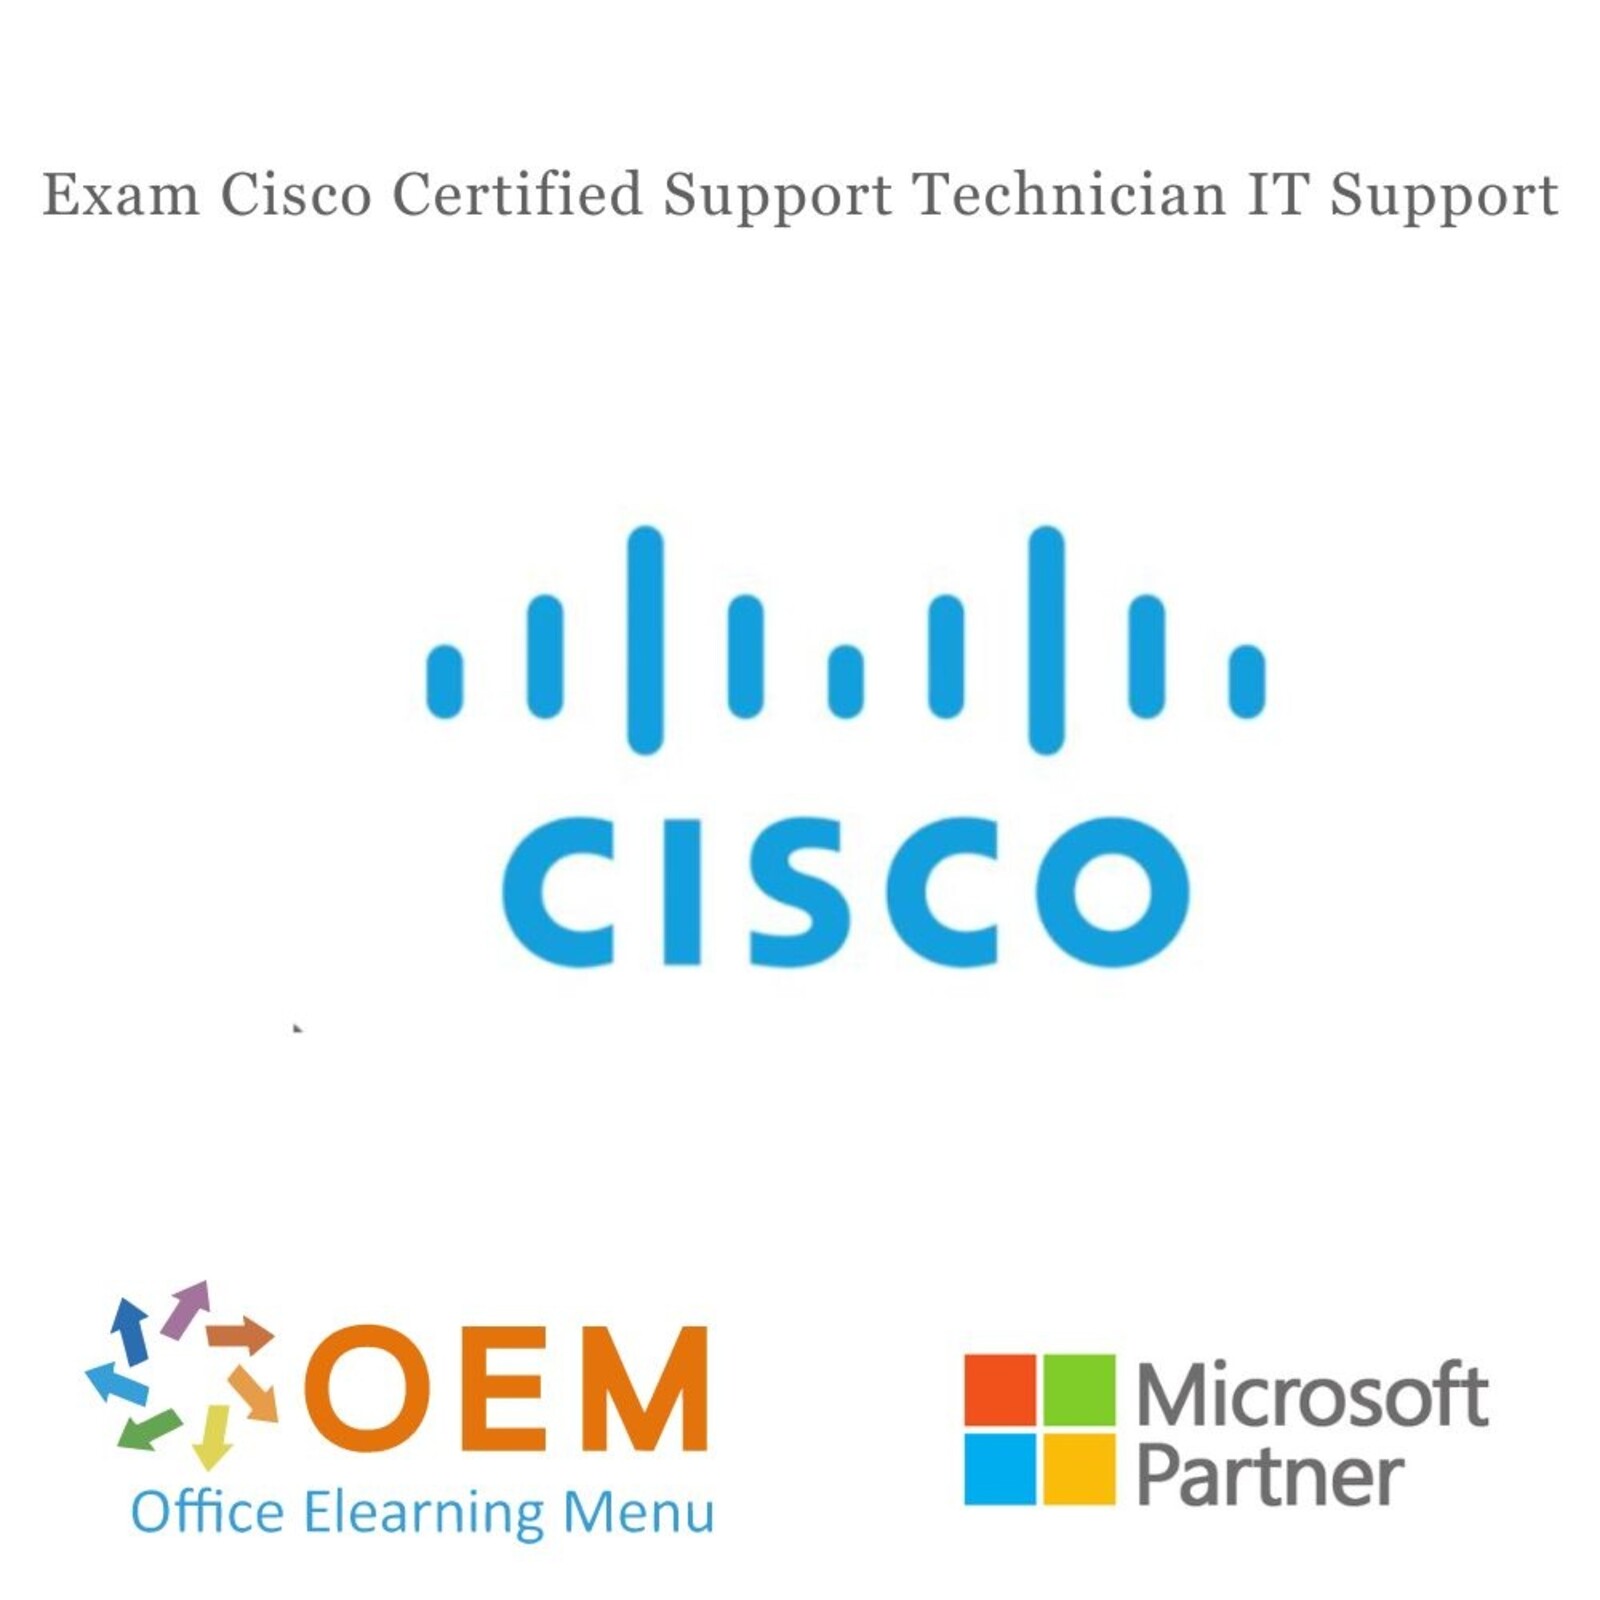 Certiport - Pearson Vue Exam Cisco Certified Support Technician IT Support